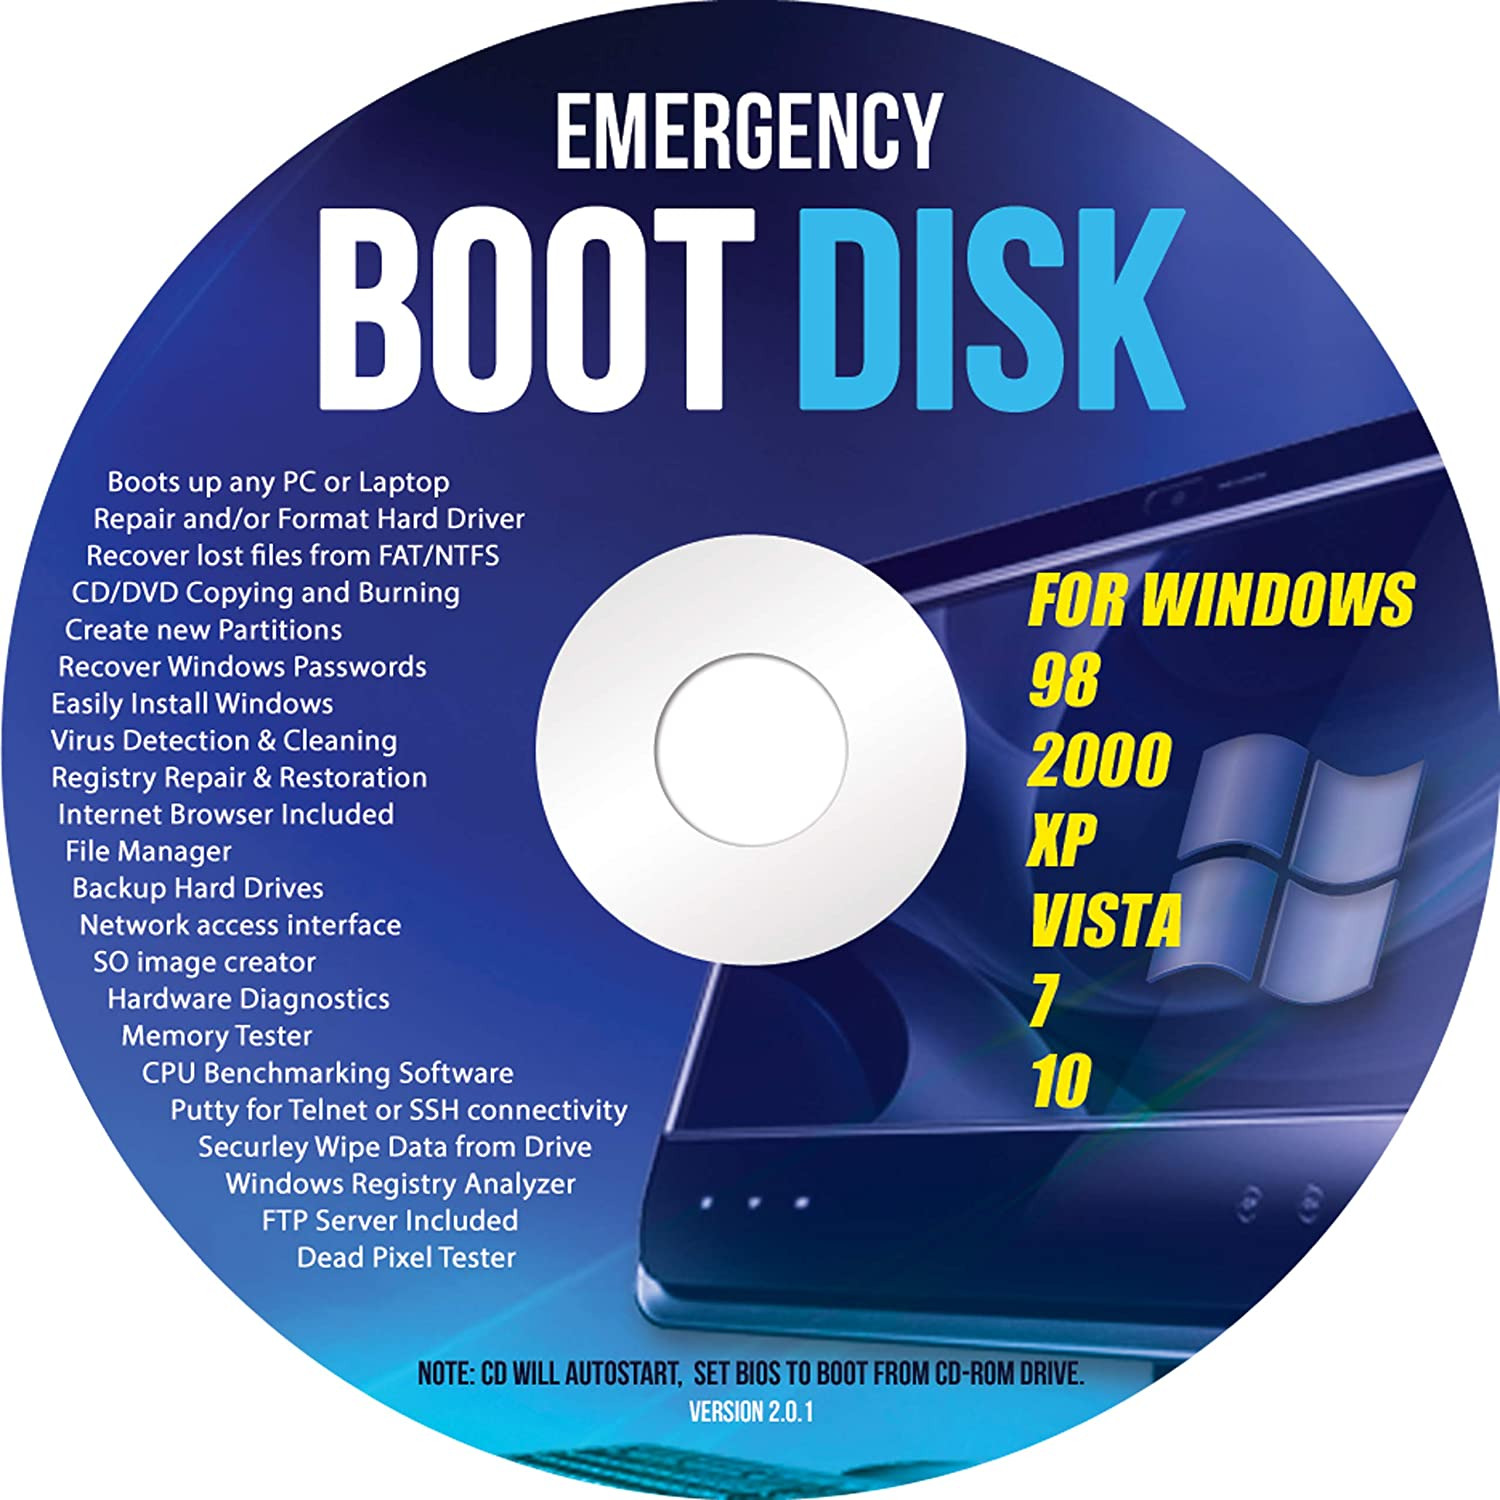 Windows Emergency Boot Disk - for Windows 98, 2000, XP, Vista, 7, 10 PC